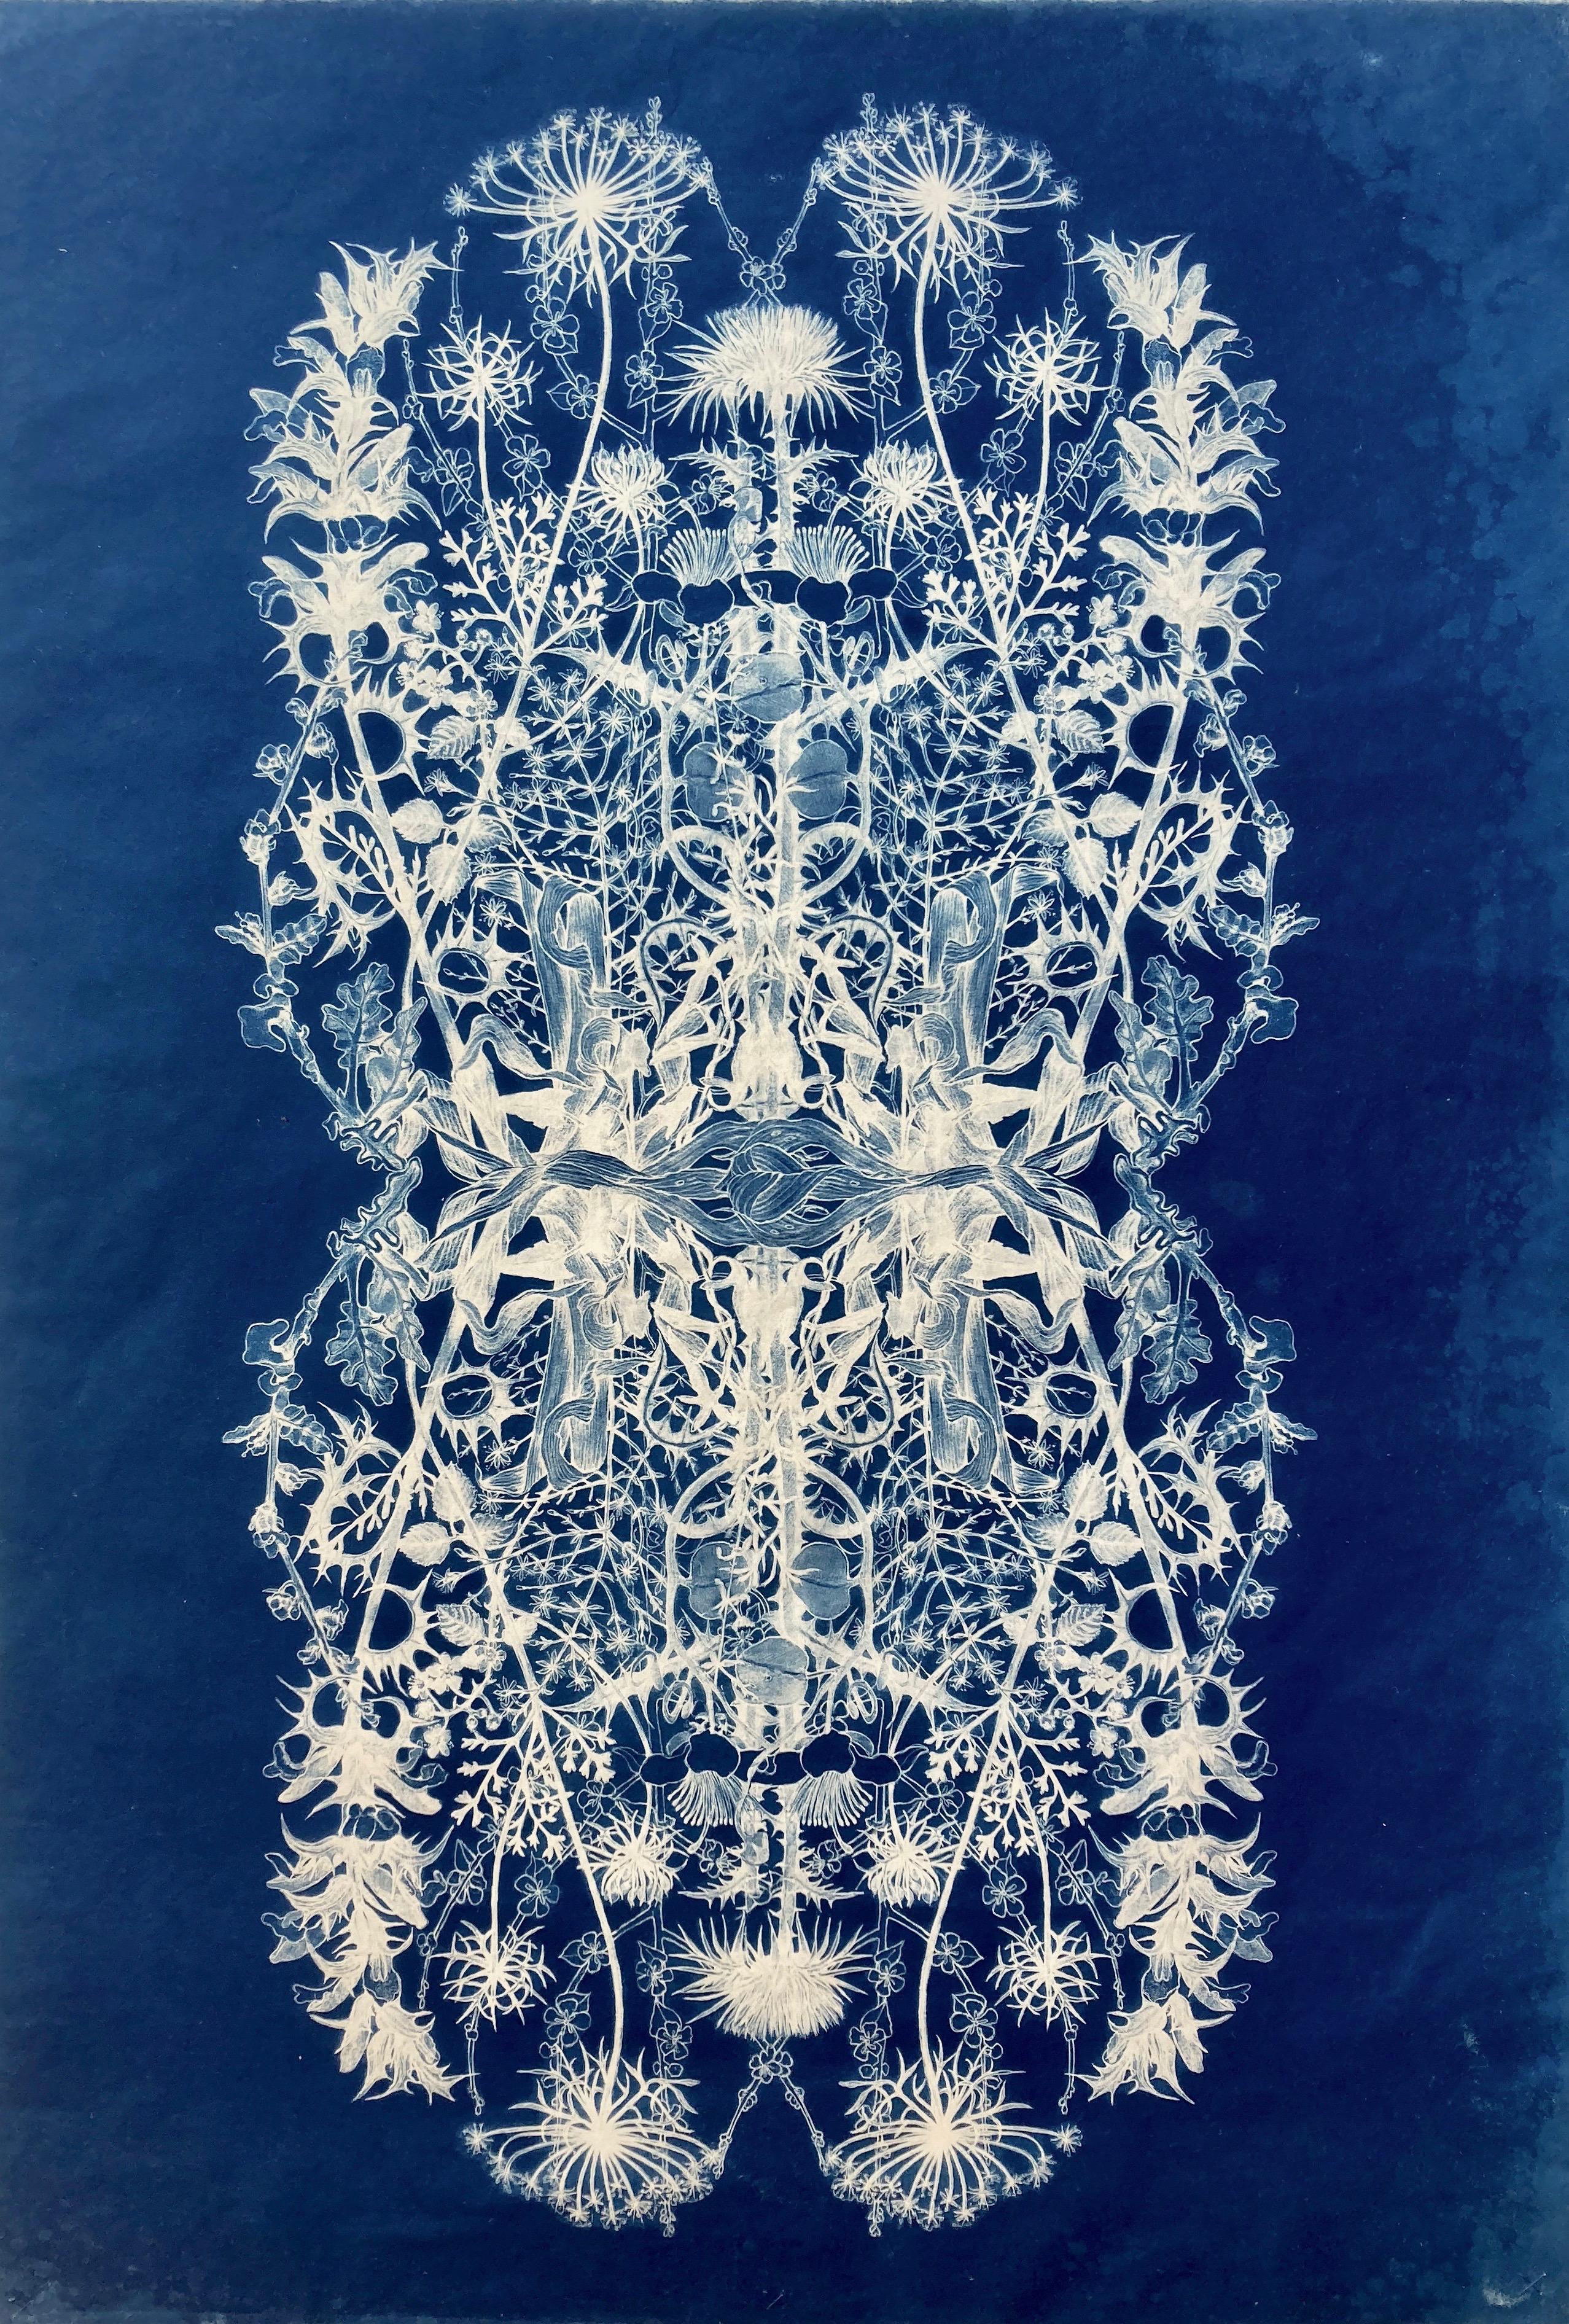 Still-Life Print Judith Allen-Efstathiou - « Botanical Rhapsody II »  Photographie à motif floral réaliste/abstraite bleu/blanc